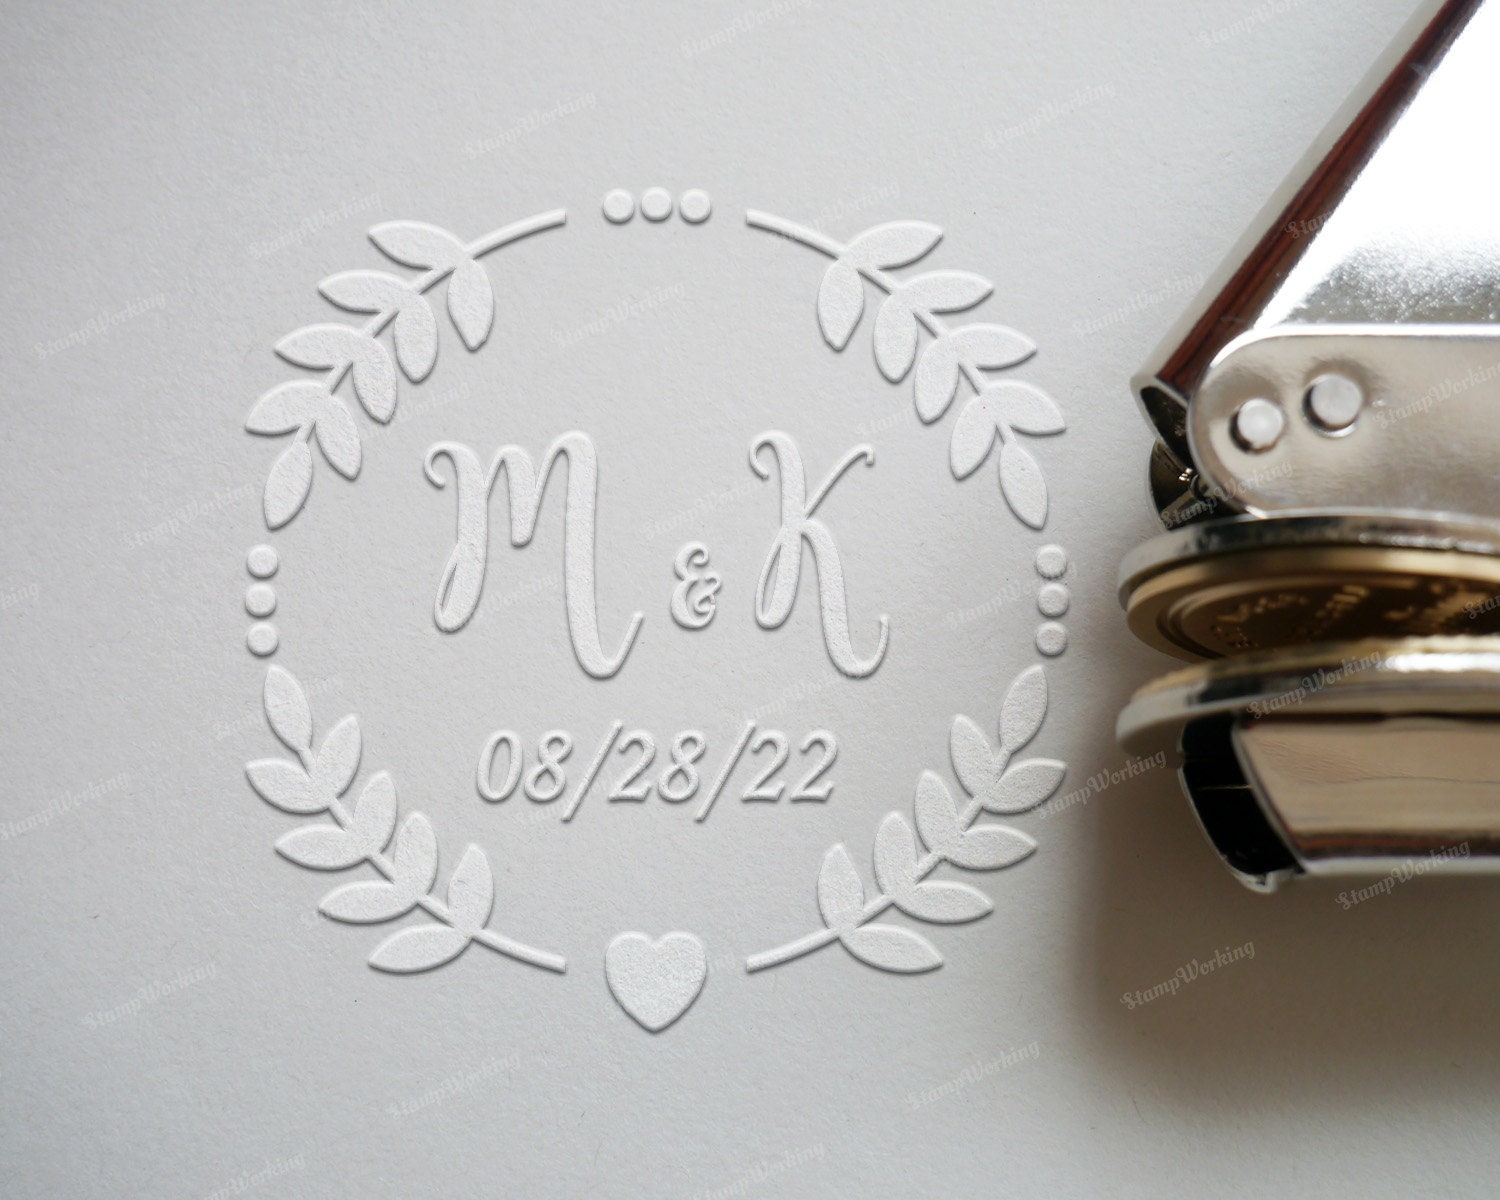 Stampi Personalized Library or Wedding Book Name Embosser Stamp | Wedding Embosser | Custom Wreath Embosser with Name | Wedding Gift | Embosser | Wedd